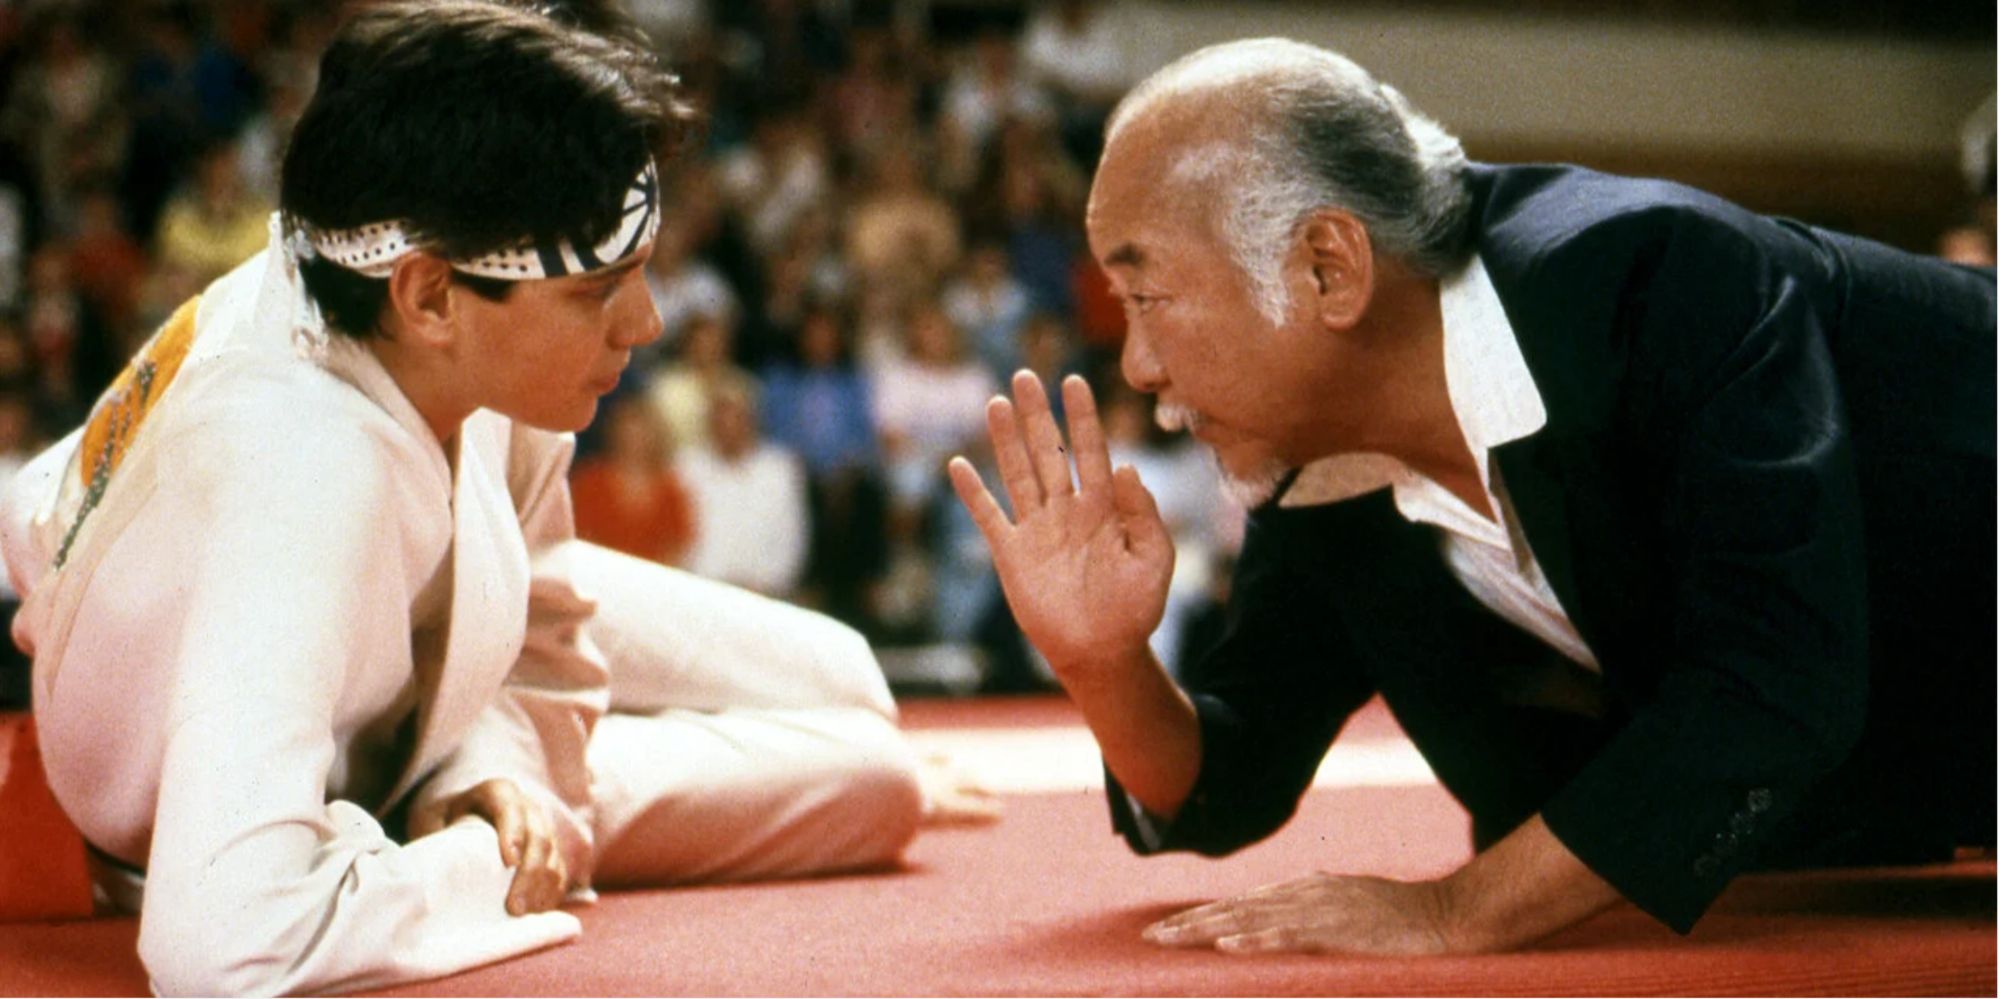 Ralph Macchio and Noriyuki Morita talking on a mat during the tournament